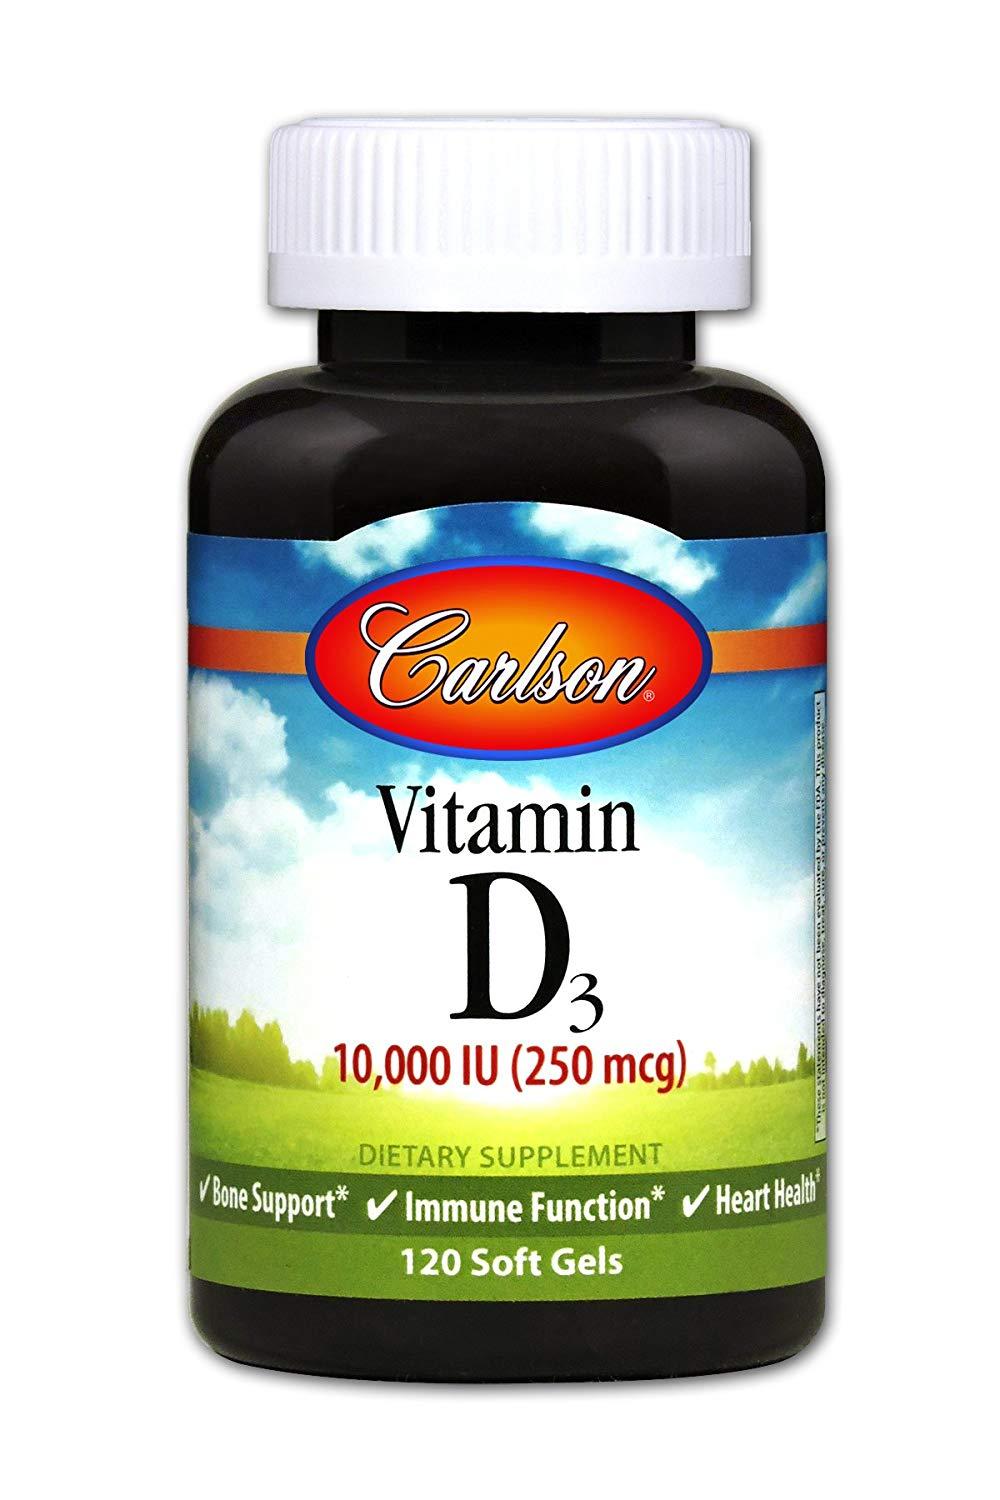 Carlson Vitamin D3 10,000 IU 120 Softgels Immunse Support, Heart Health